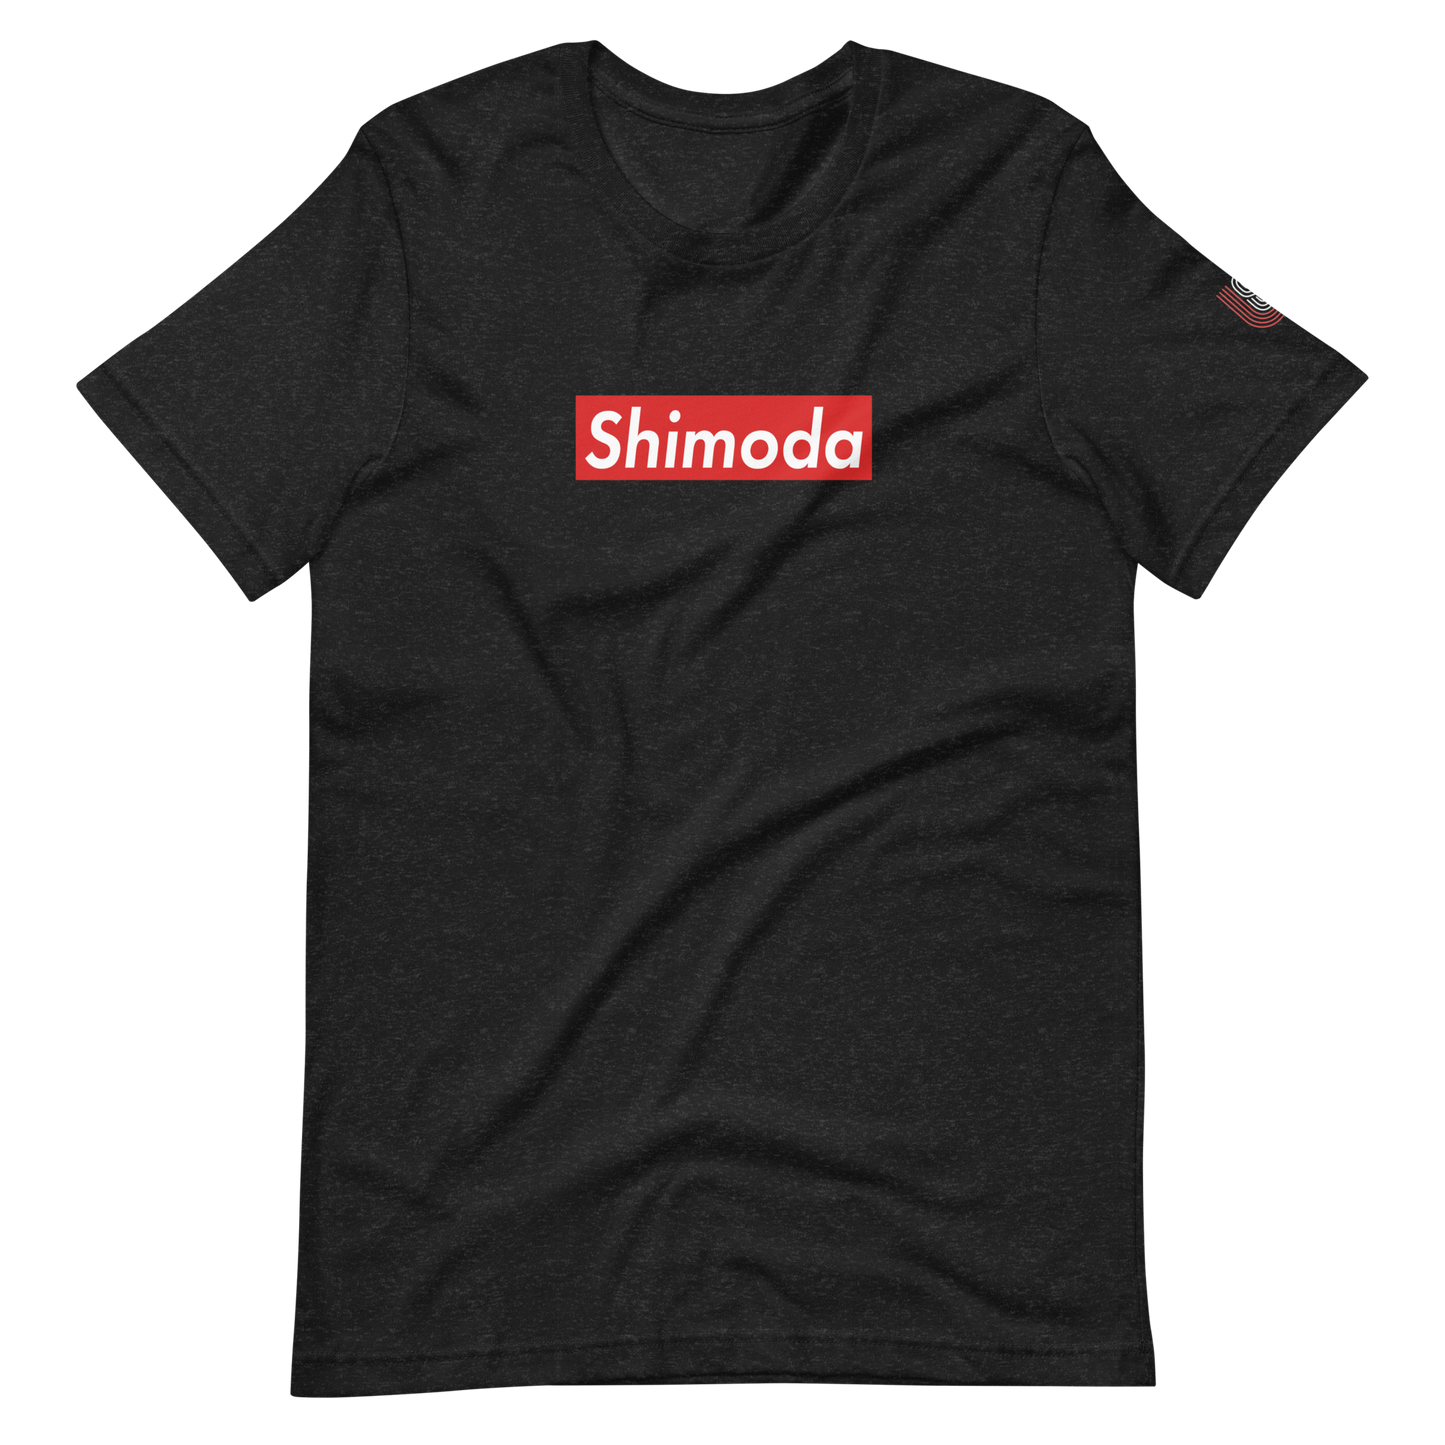 The Shimoda Shirt